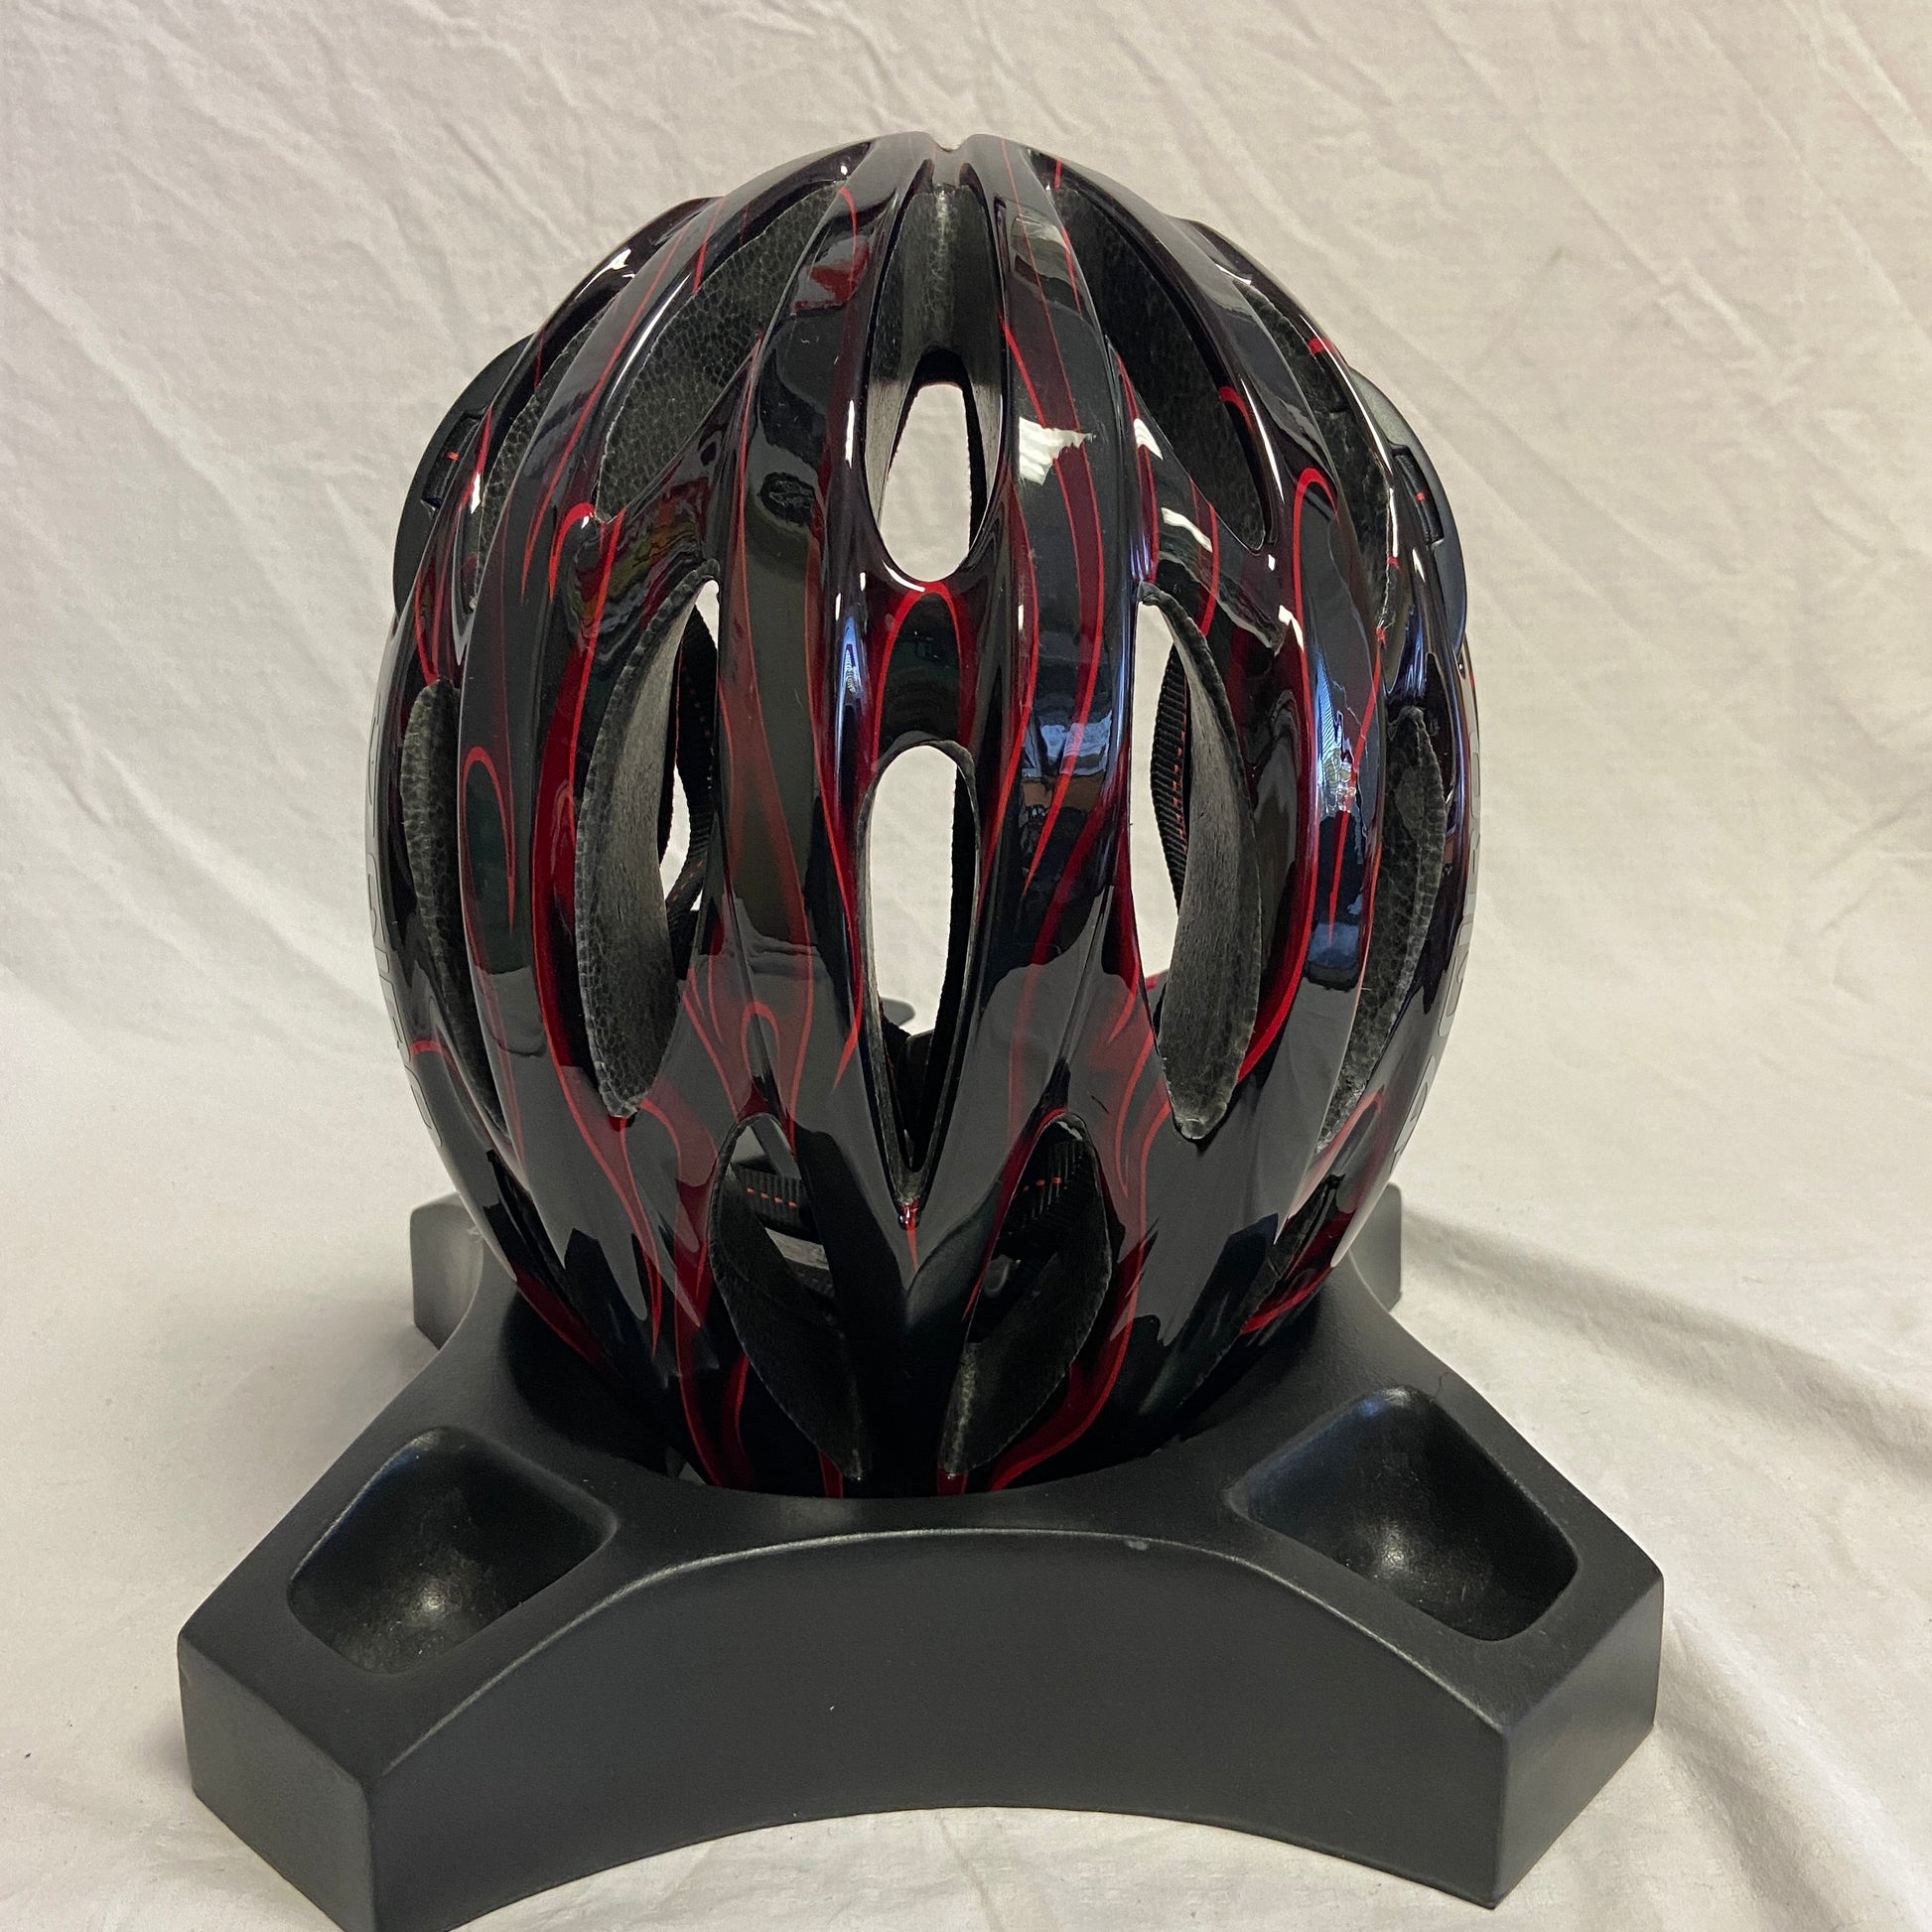 Giro Saros Road Helmet Black / Red Flames Small (Open Box) - ExtremeSupply.com